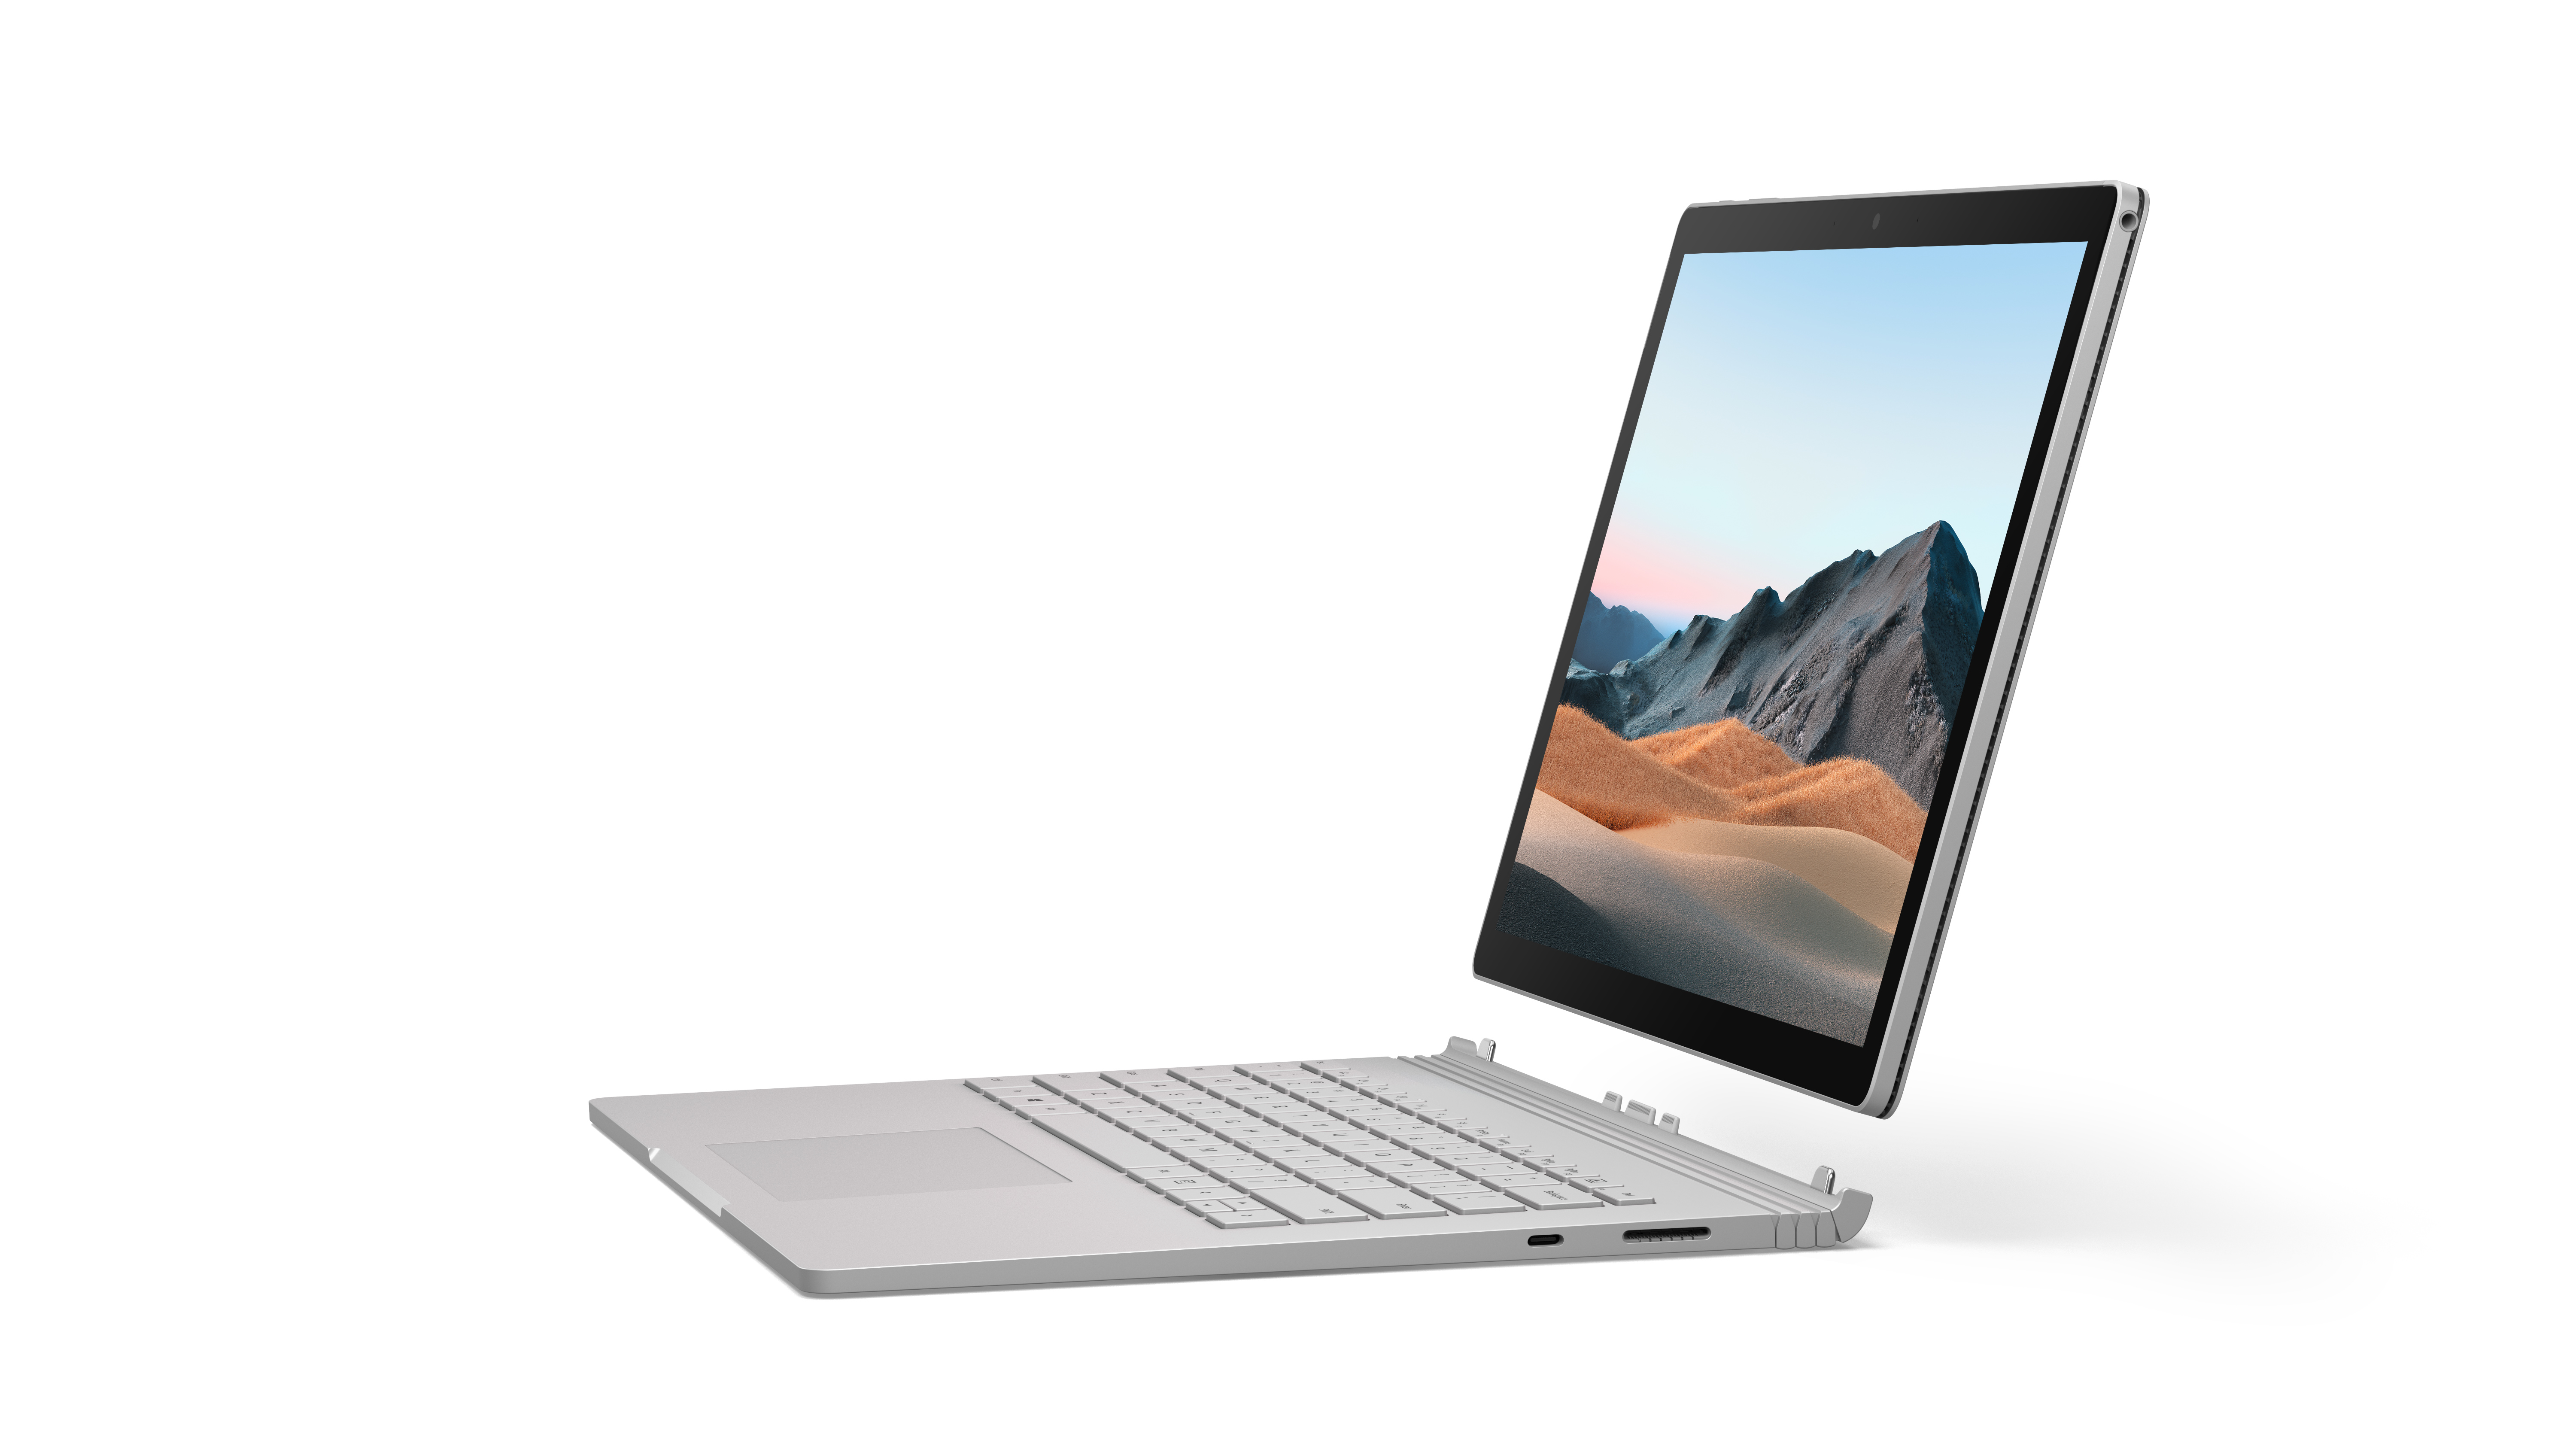 Microsoft Surface Book 3, 13" Touchscreen Laptop, Intel Core i5, 8GB RAM, 256GB SSD, Windows 10, Platinum, V6F-00001 - image 1 of 9